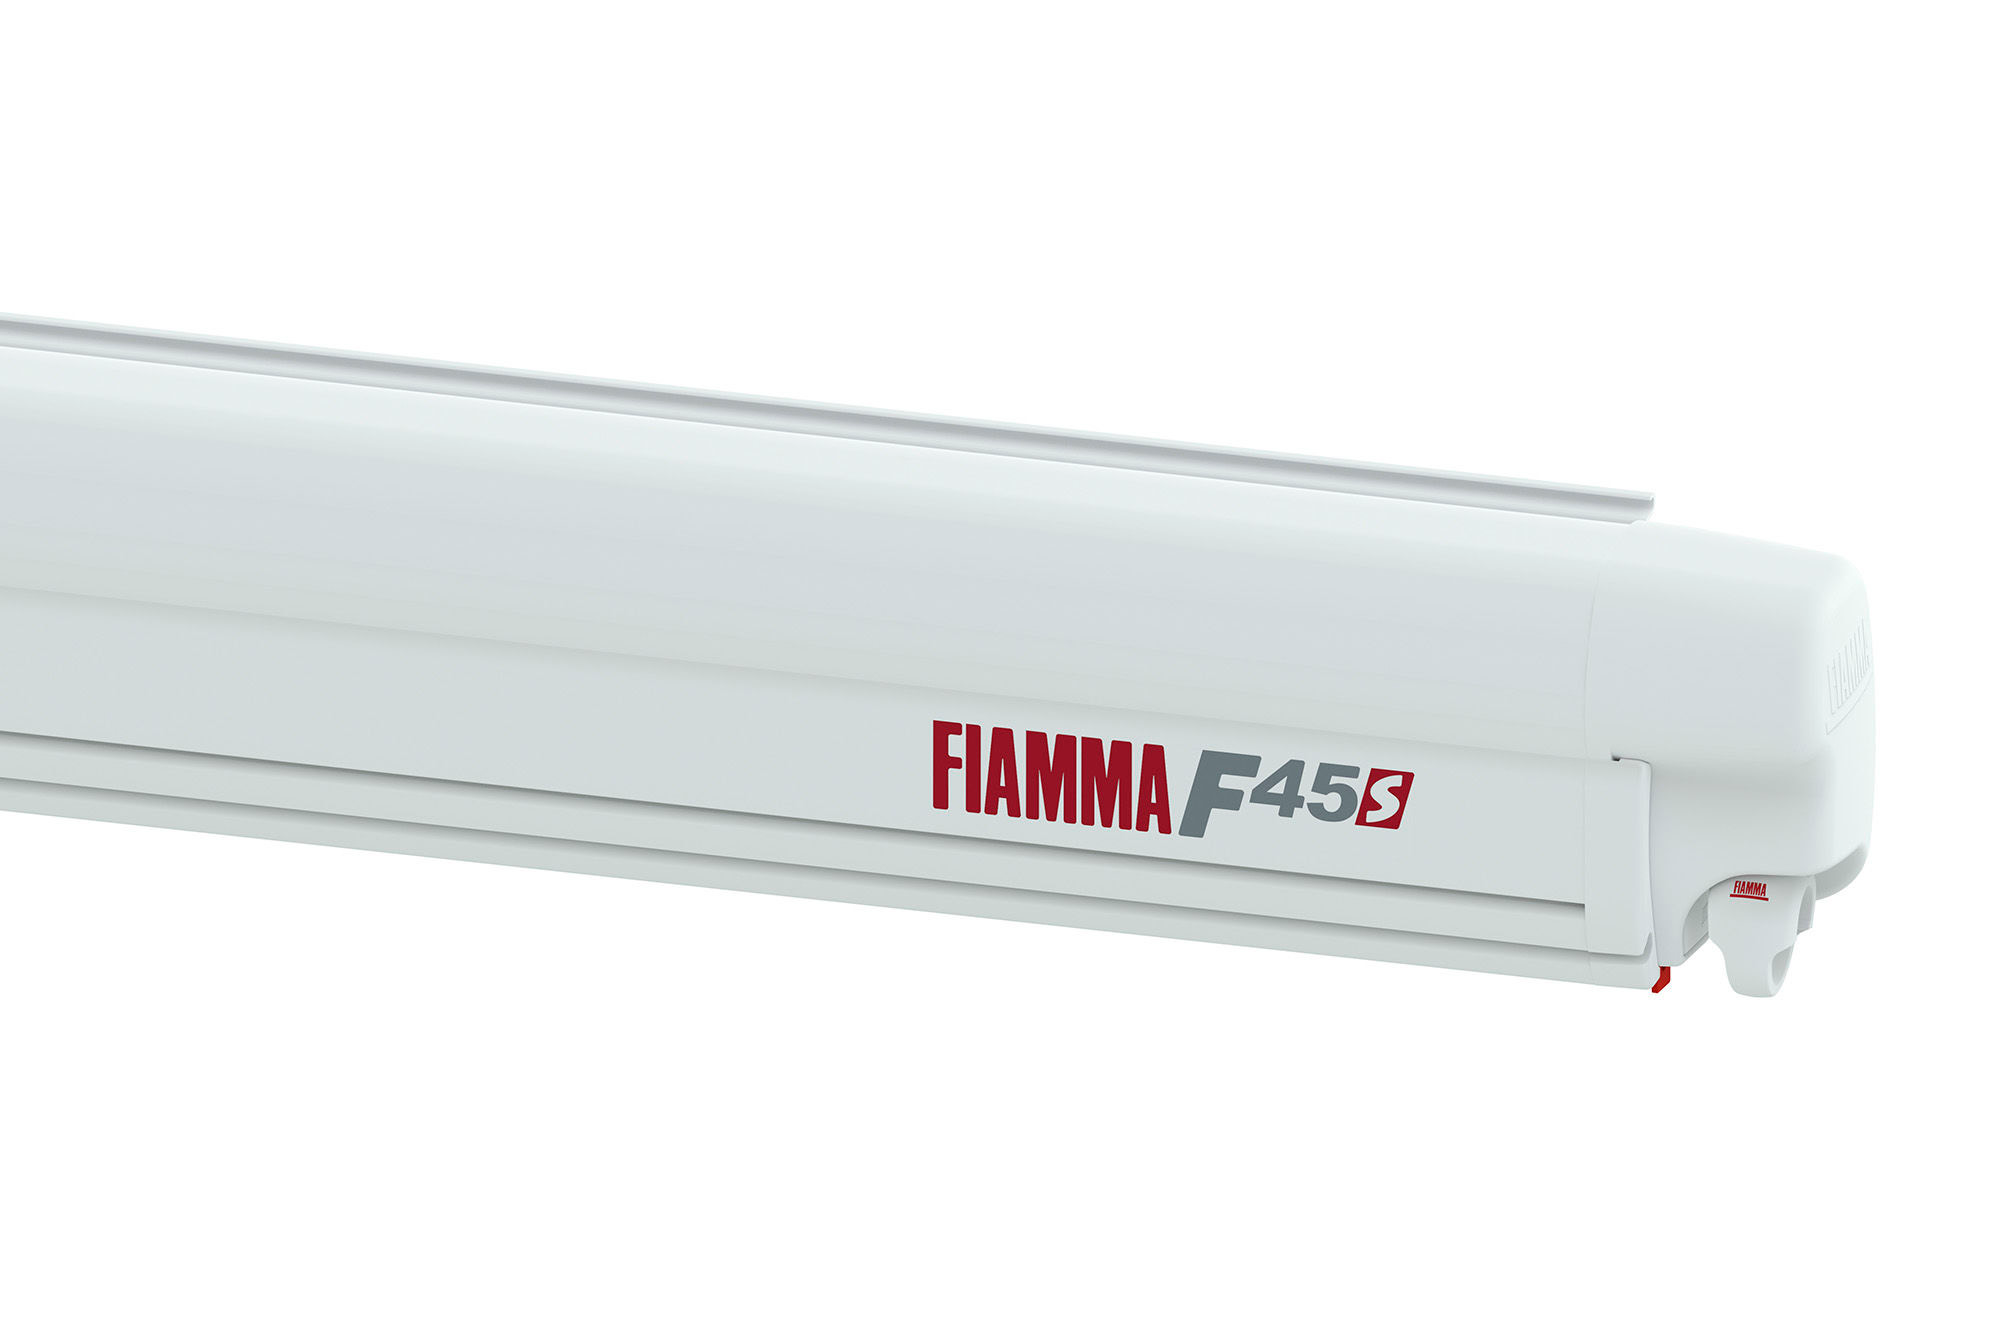 Fiamma F45s 350 Markise Rechtslenker Gehäusefarbe Polar White Tuchfarbe Royal Grey 350 cm